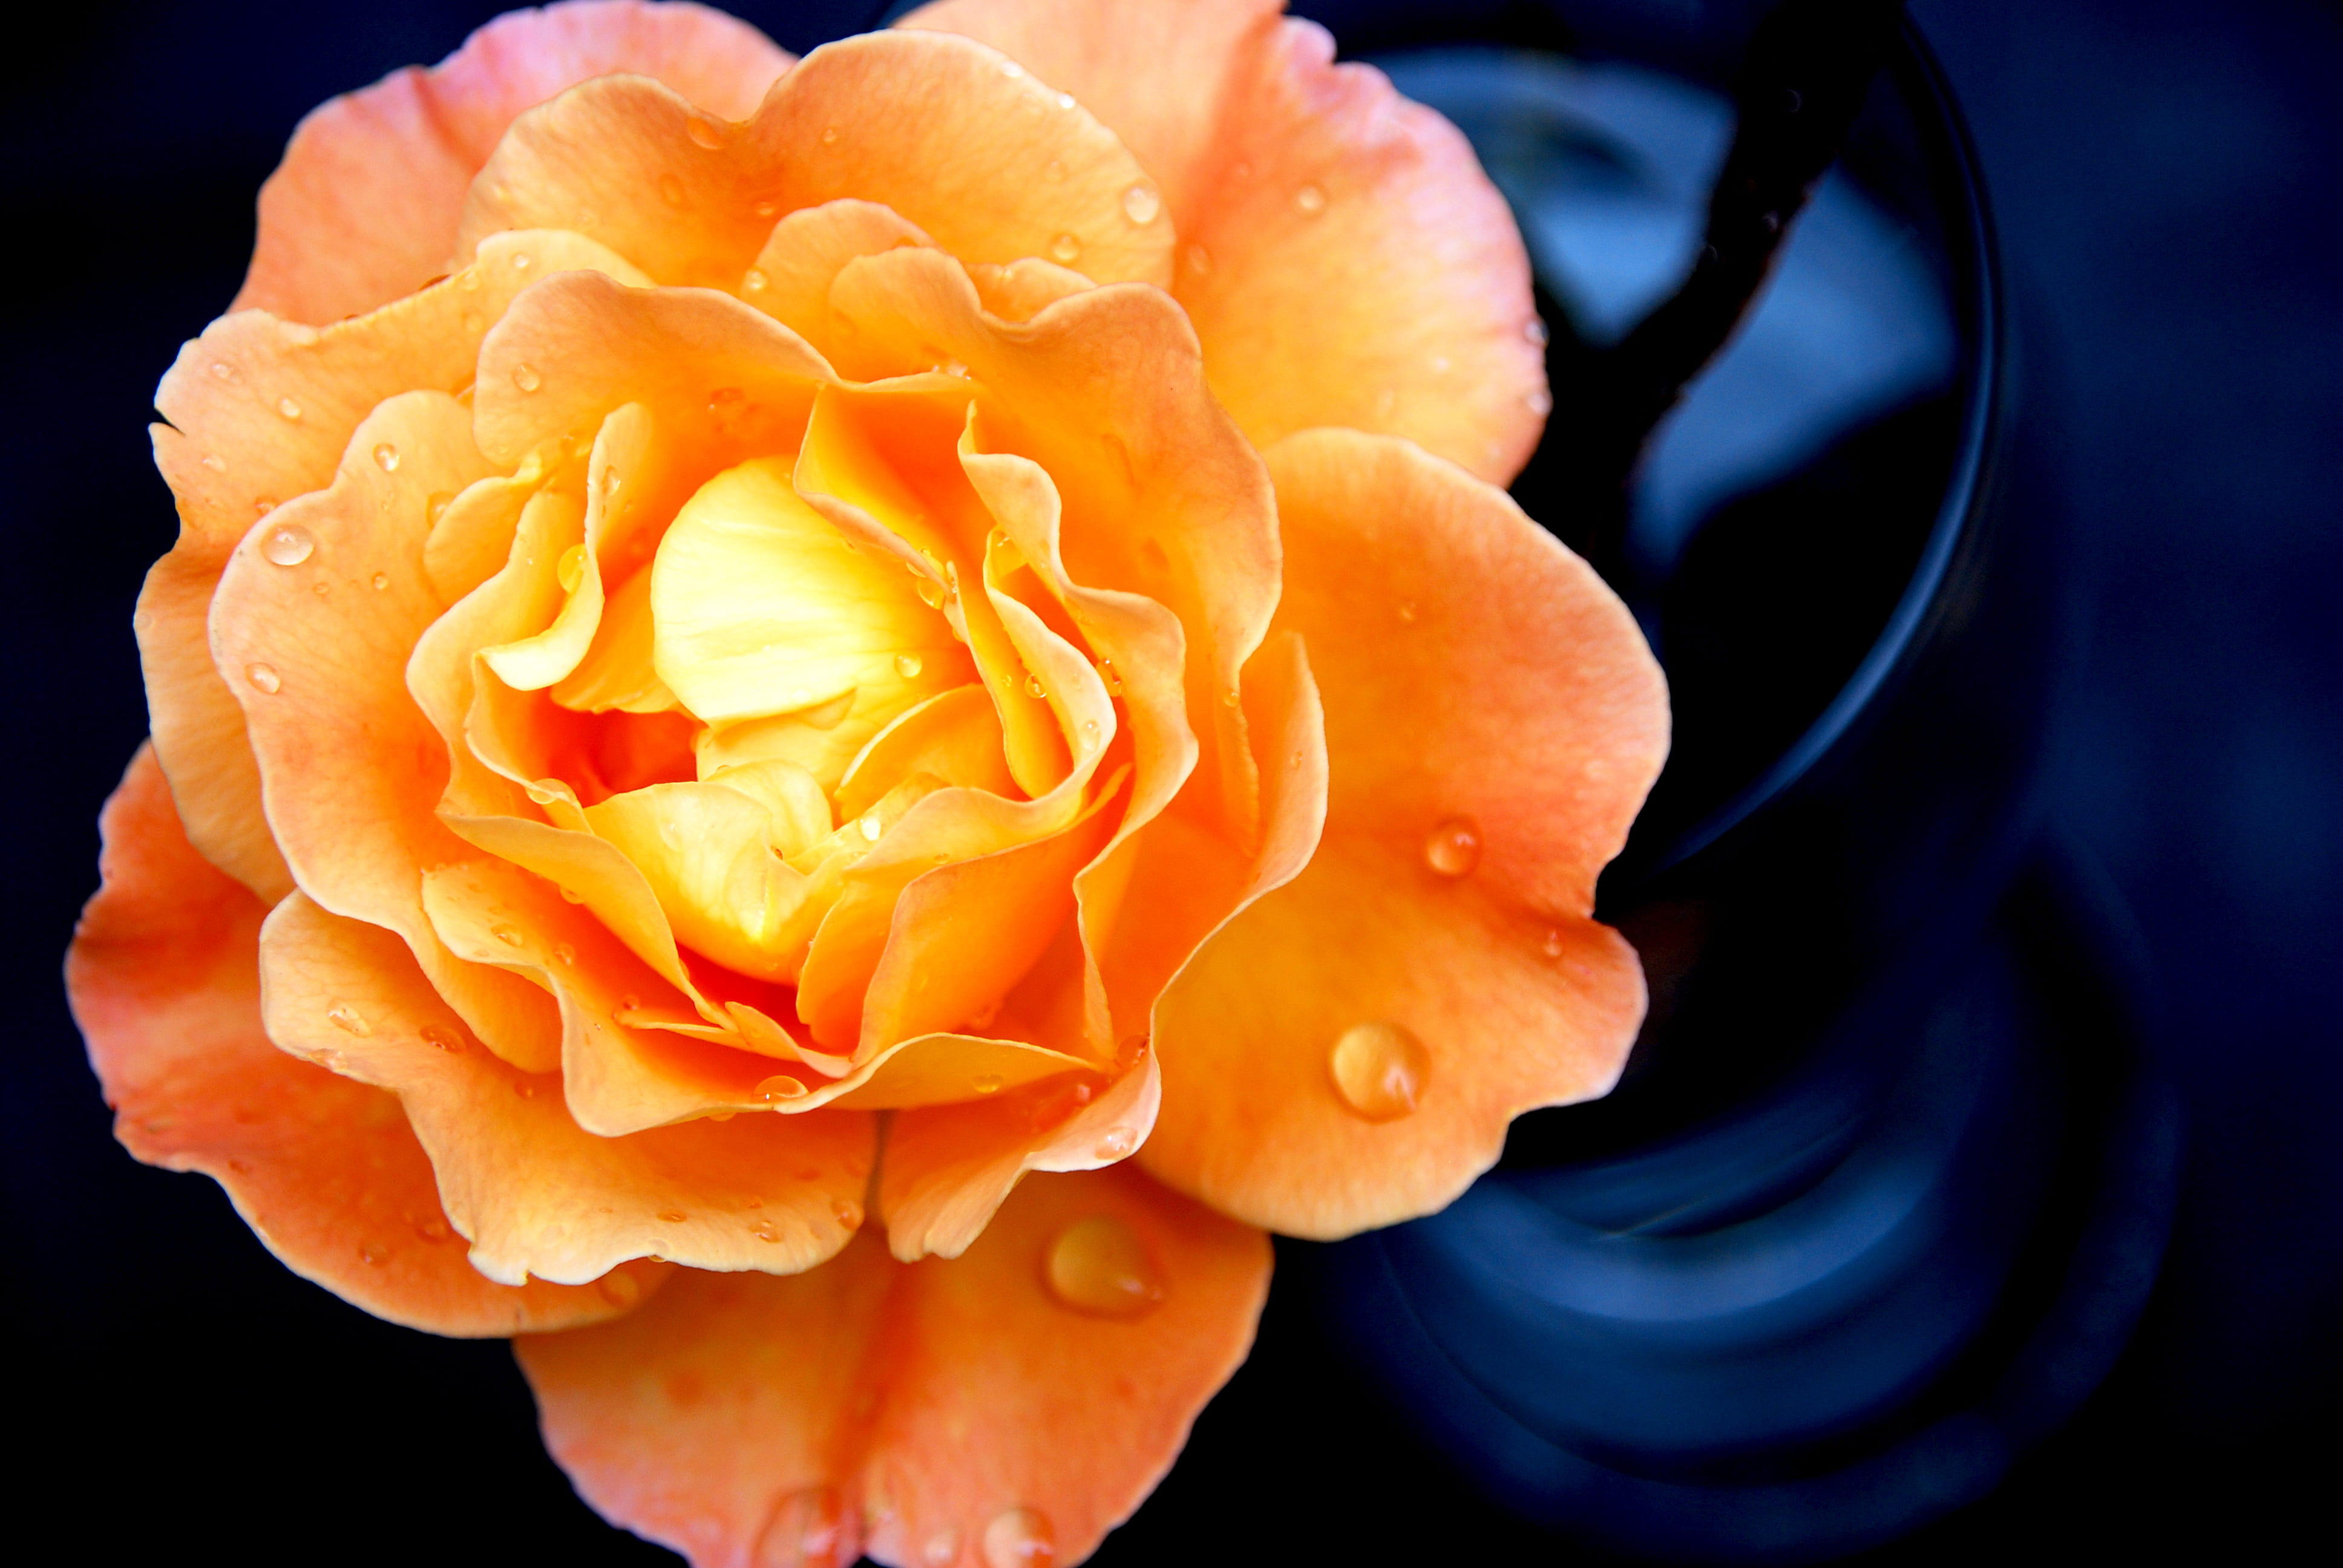 The Rose, orange flower with water drops, nature, waterdrop, petal